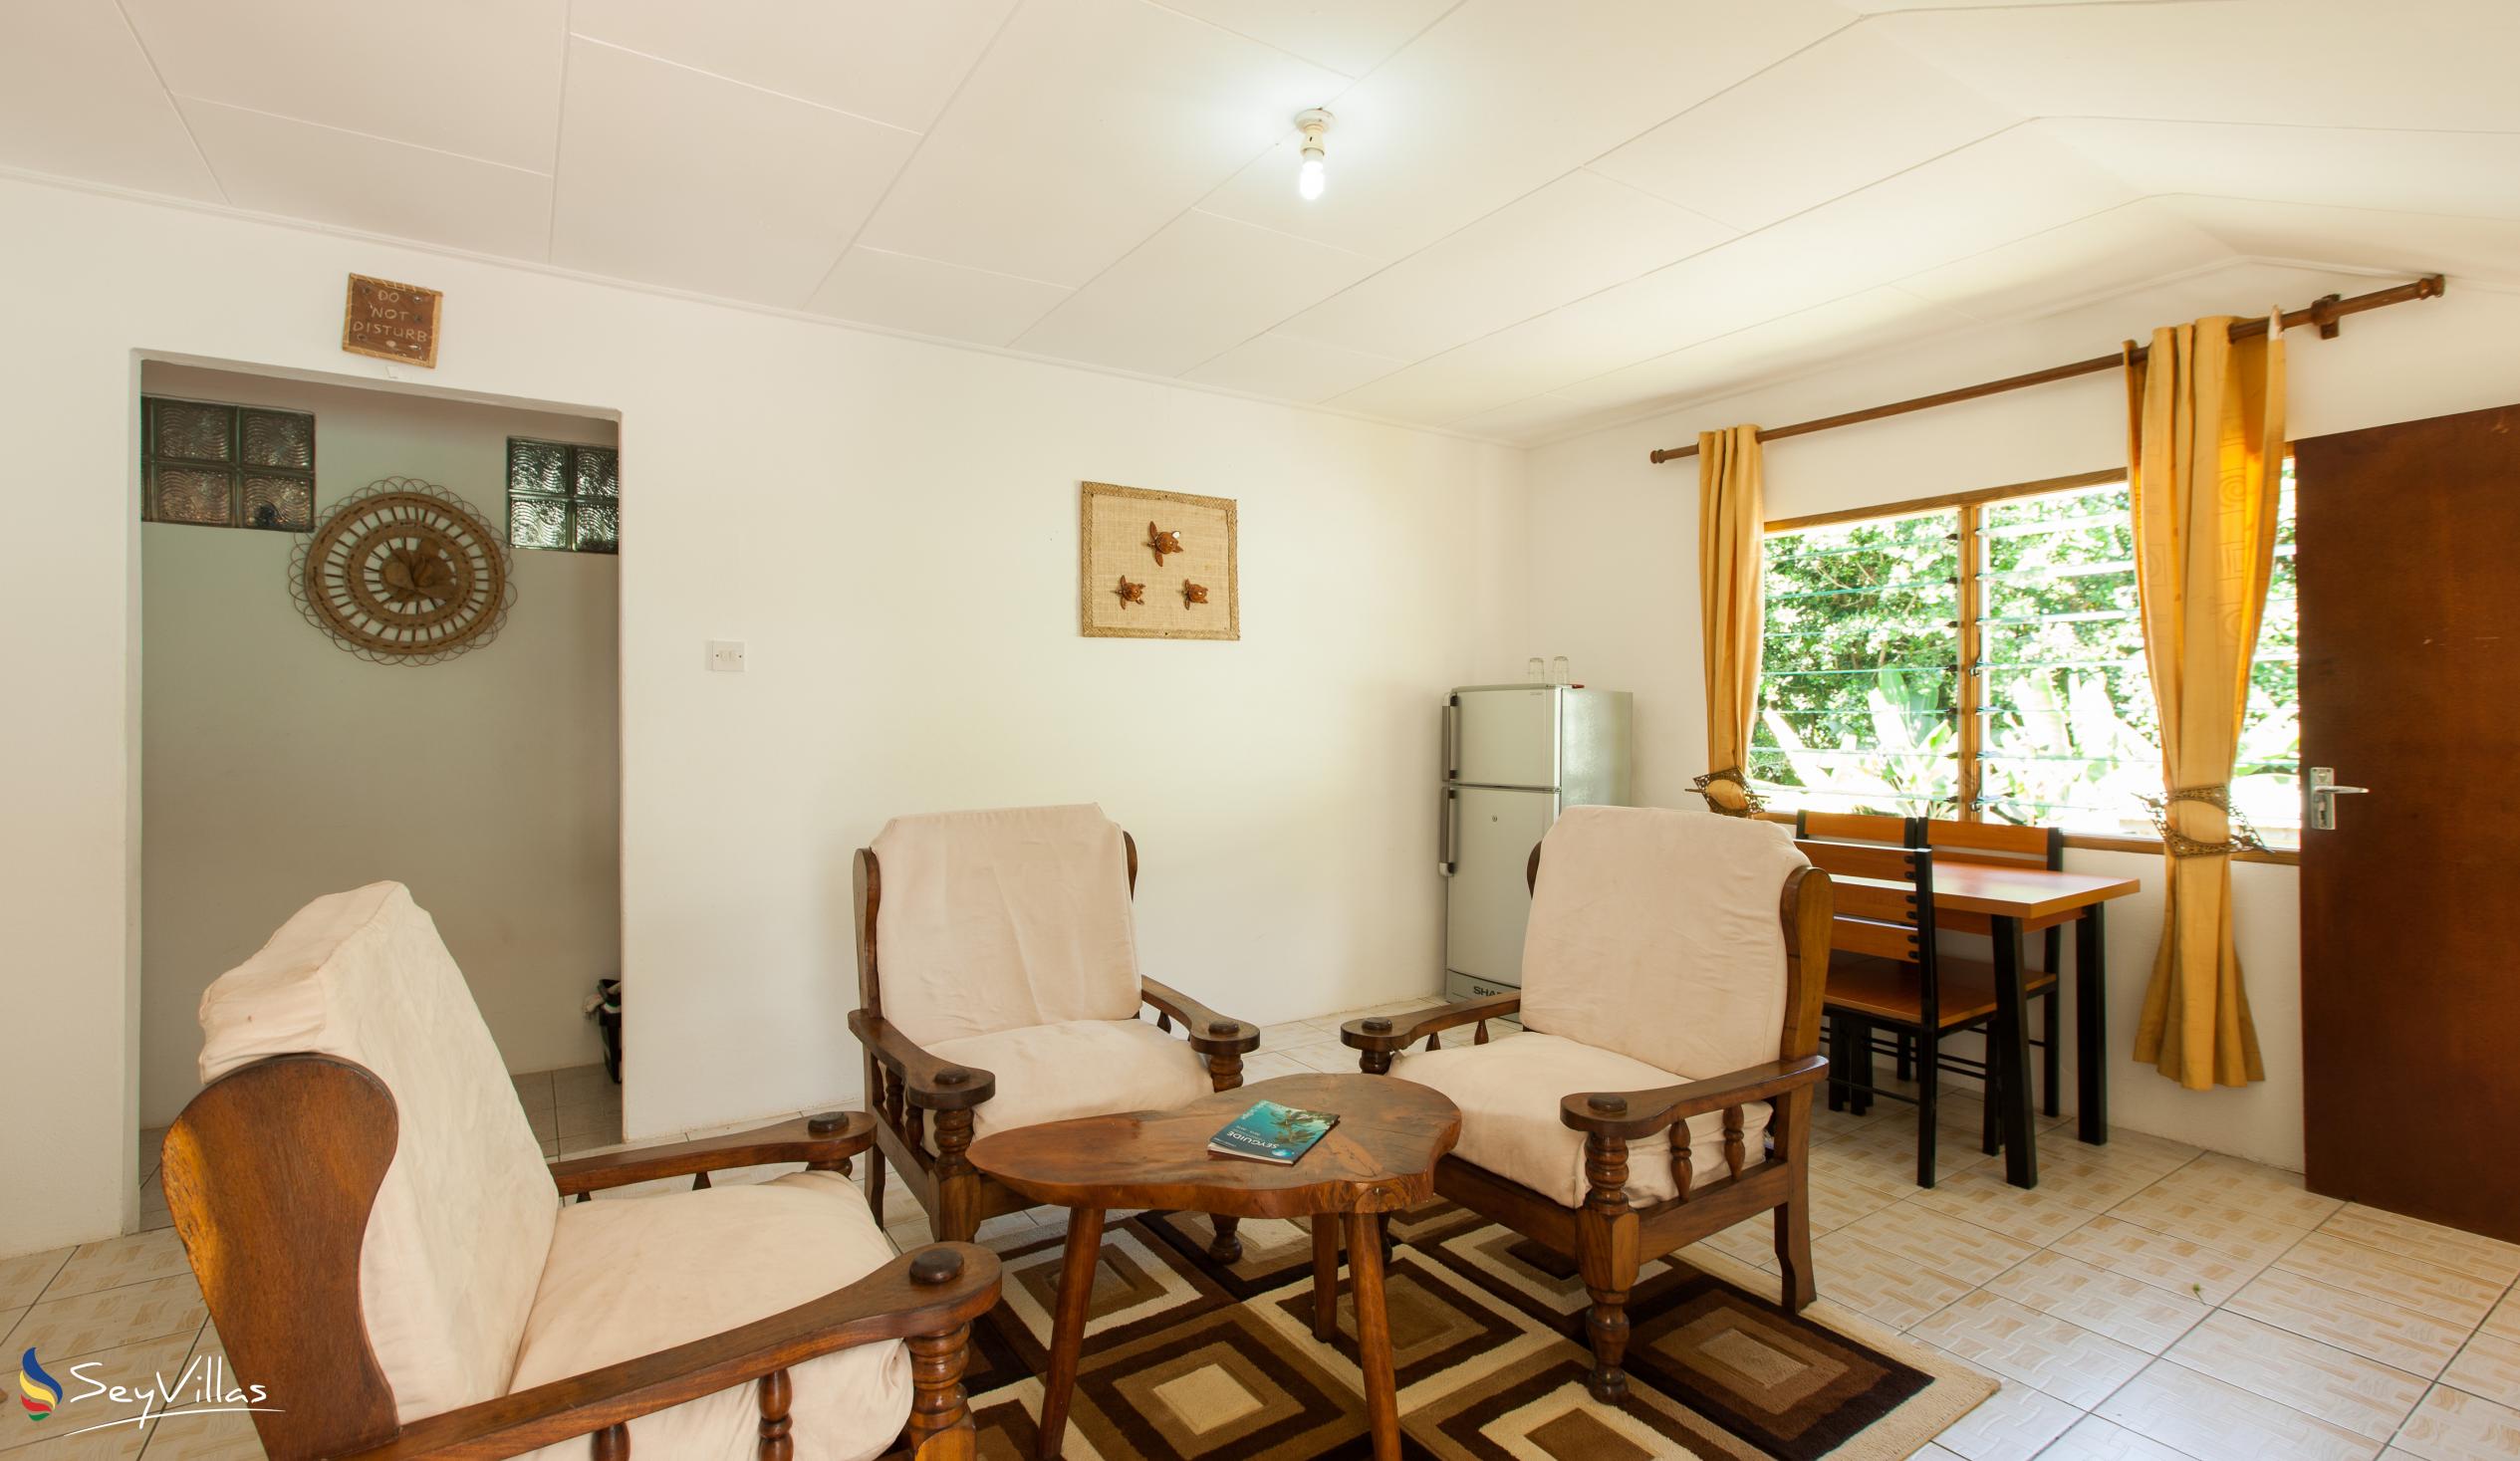 Foto 43: Tannette's Villa - Innenbereich - La Digue (Seychellen)